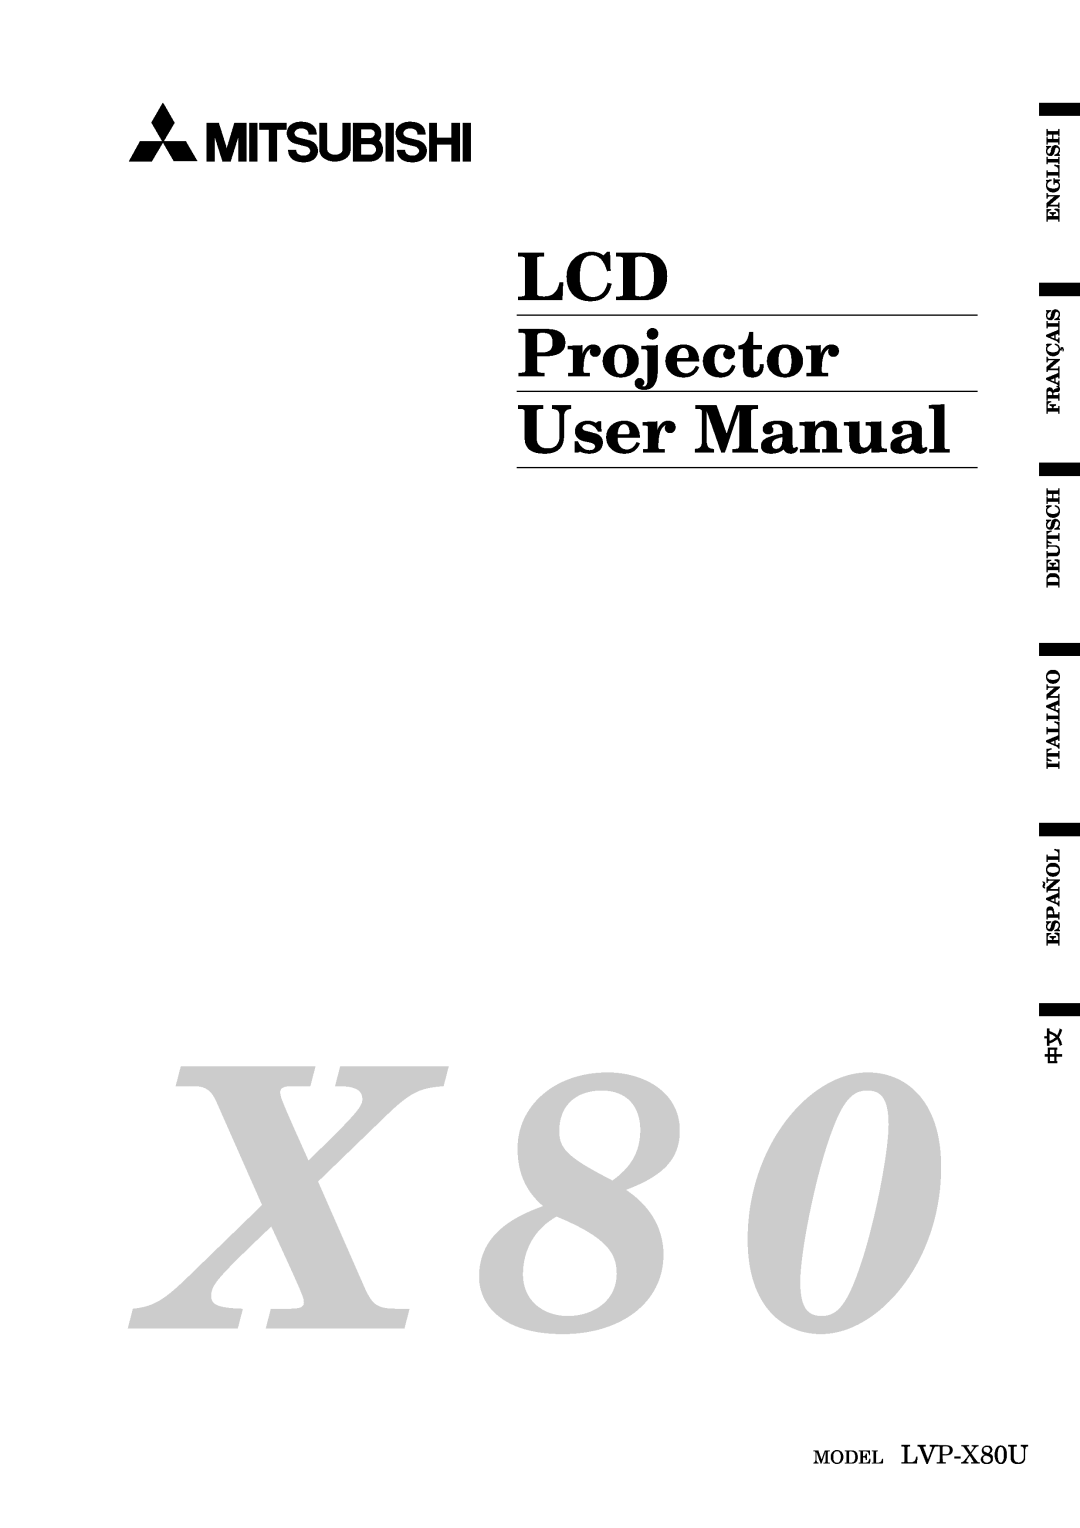 Mitsubishi Electronics user manual MODEL LVP-X80U, LCD Projector User Manual, English Français Deutsch Italiano Español 